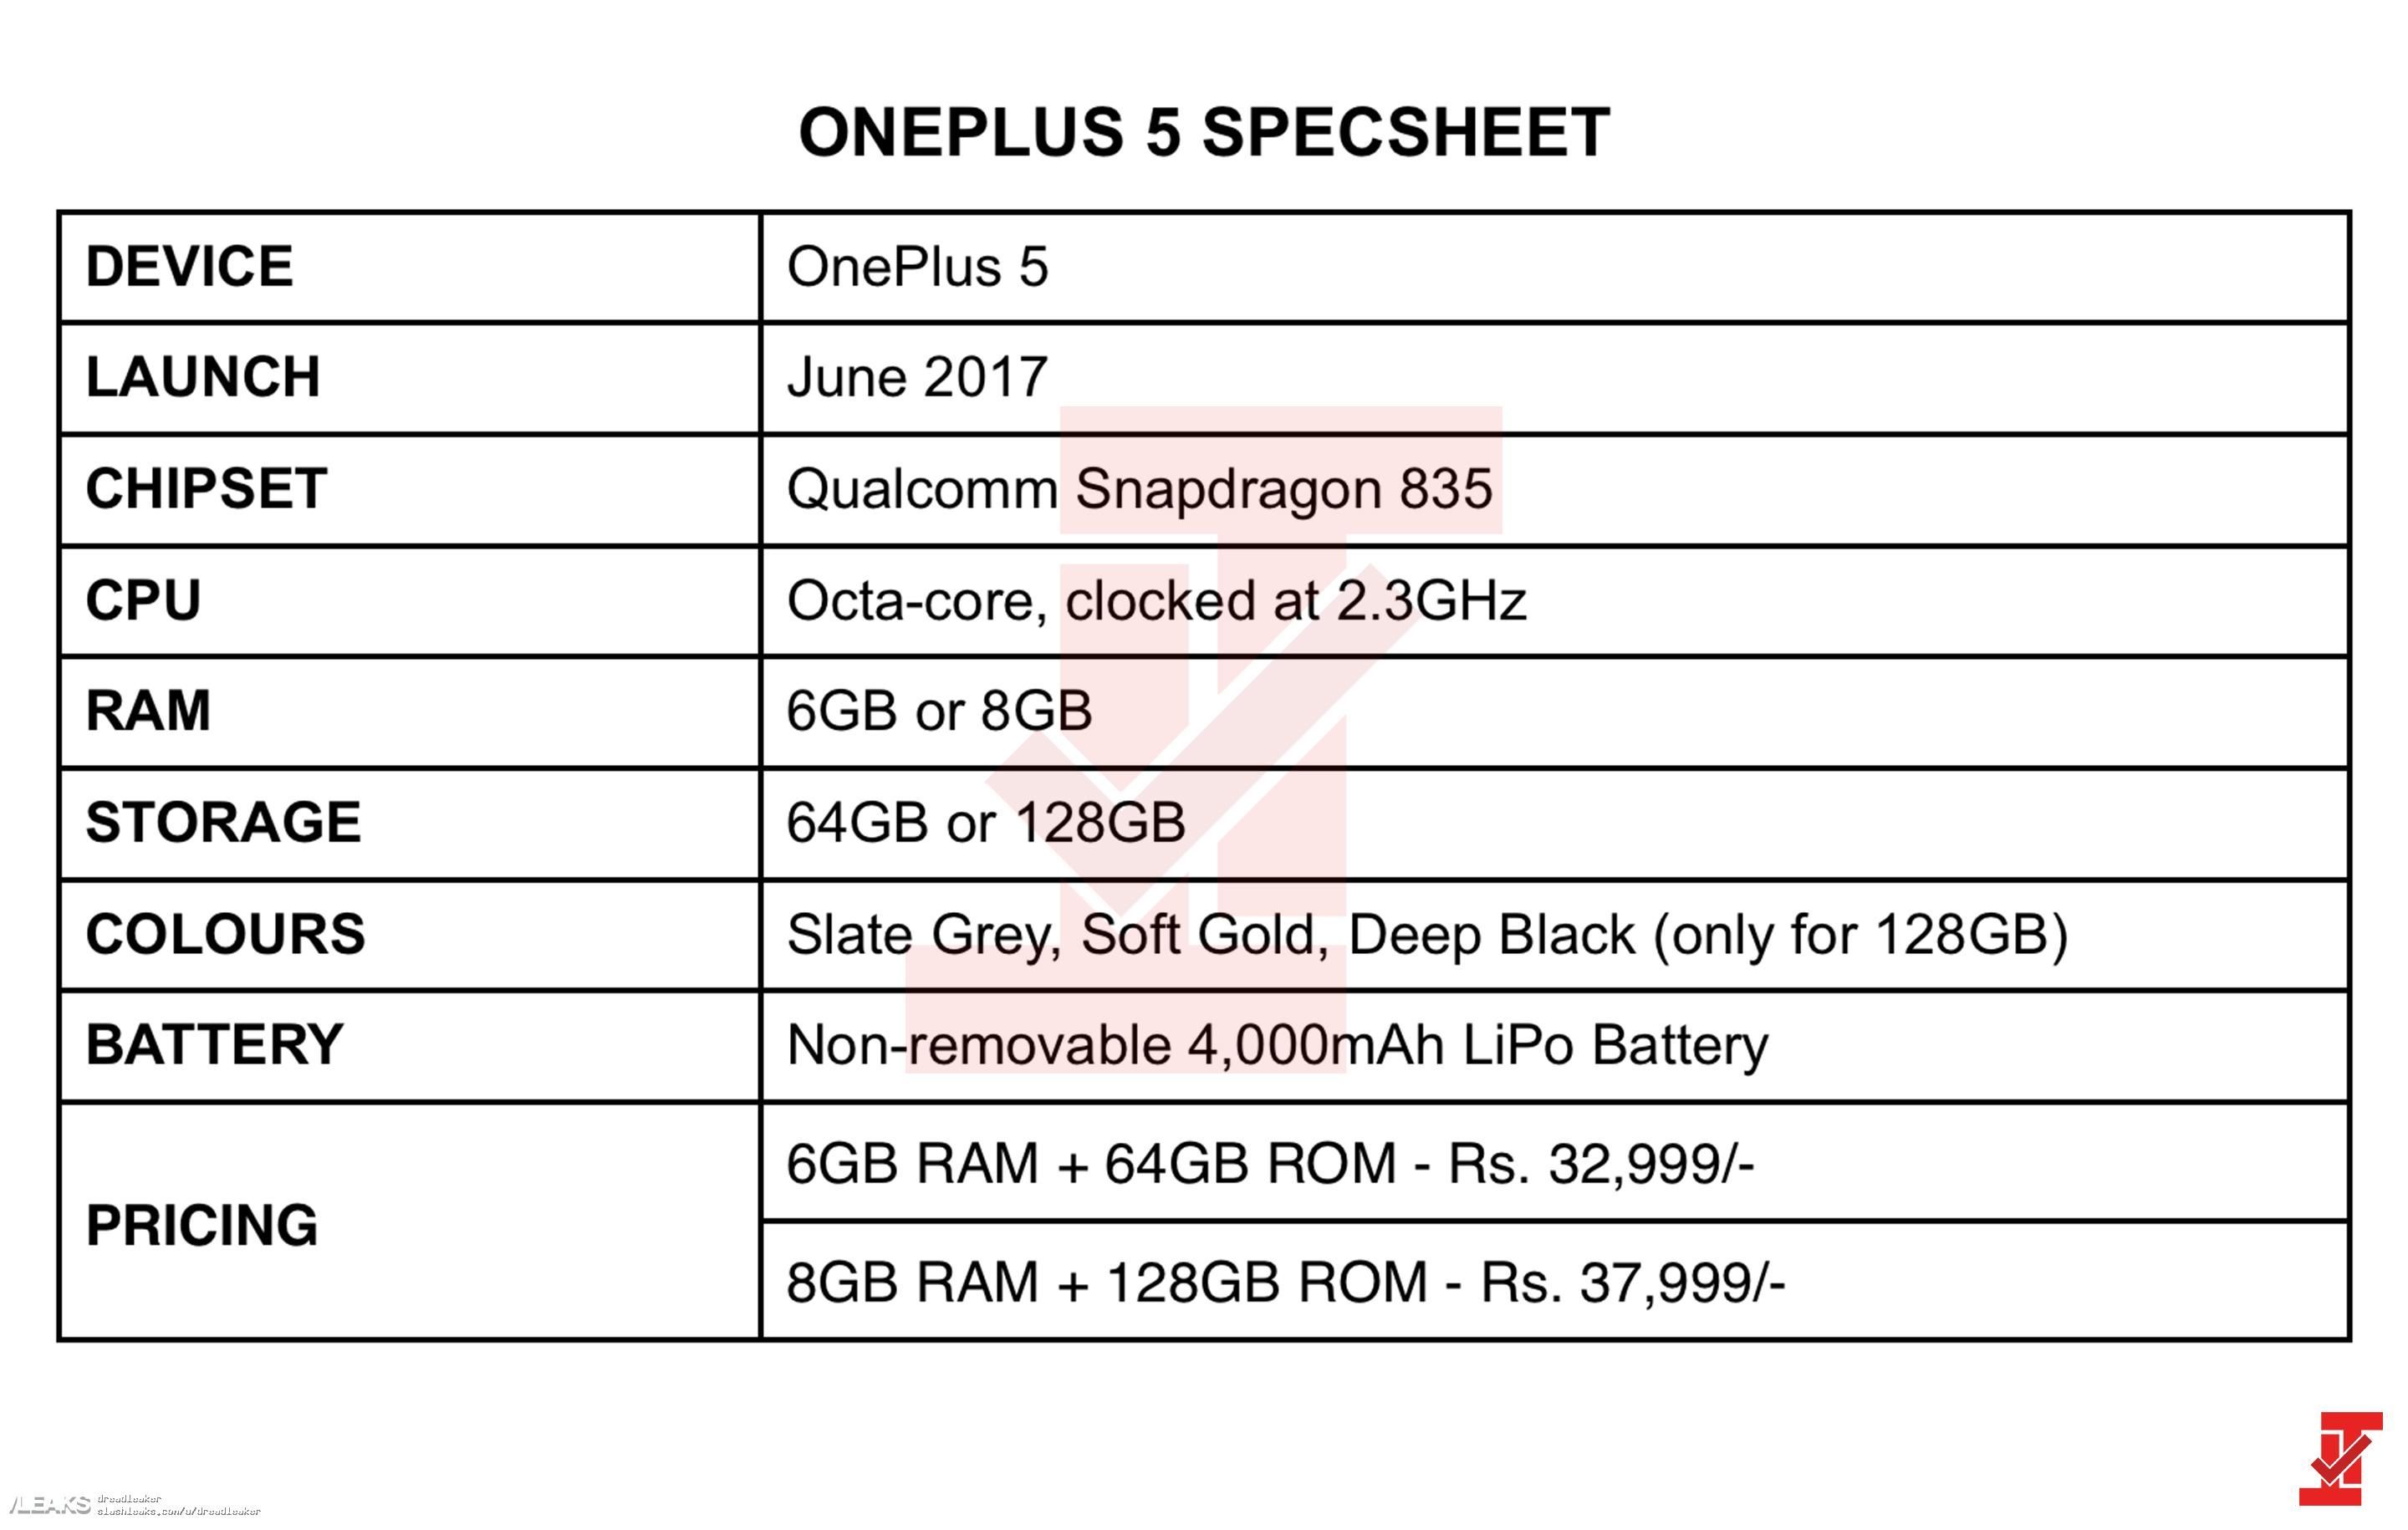 oneplus-5-specs-leaked-ahead-of-launch-jpg.77588